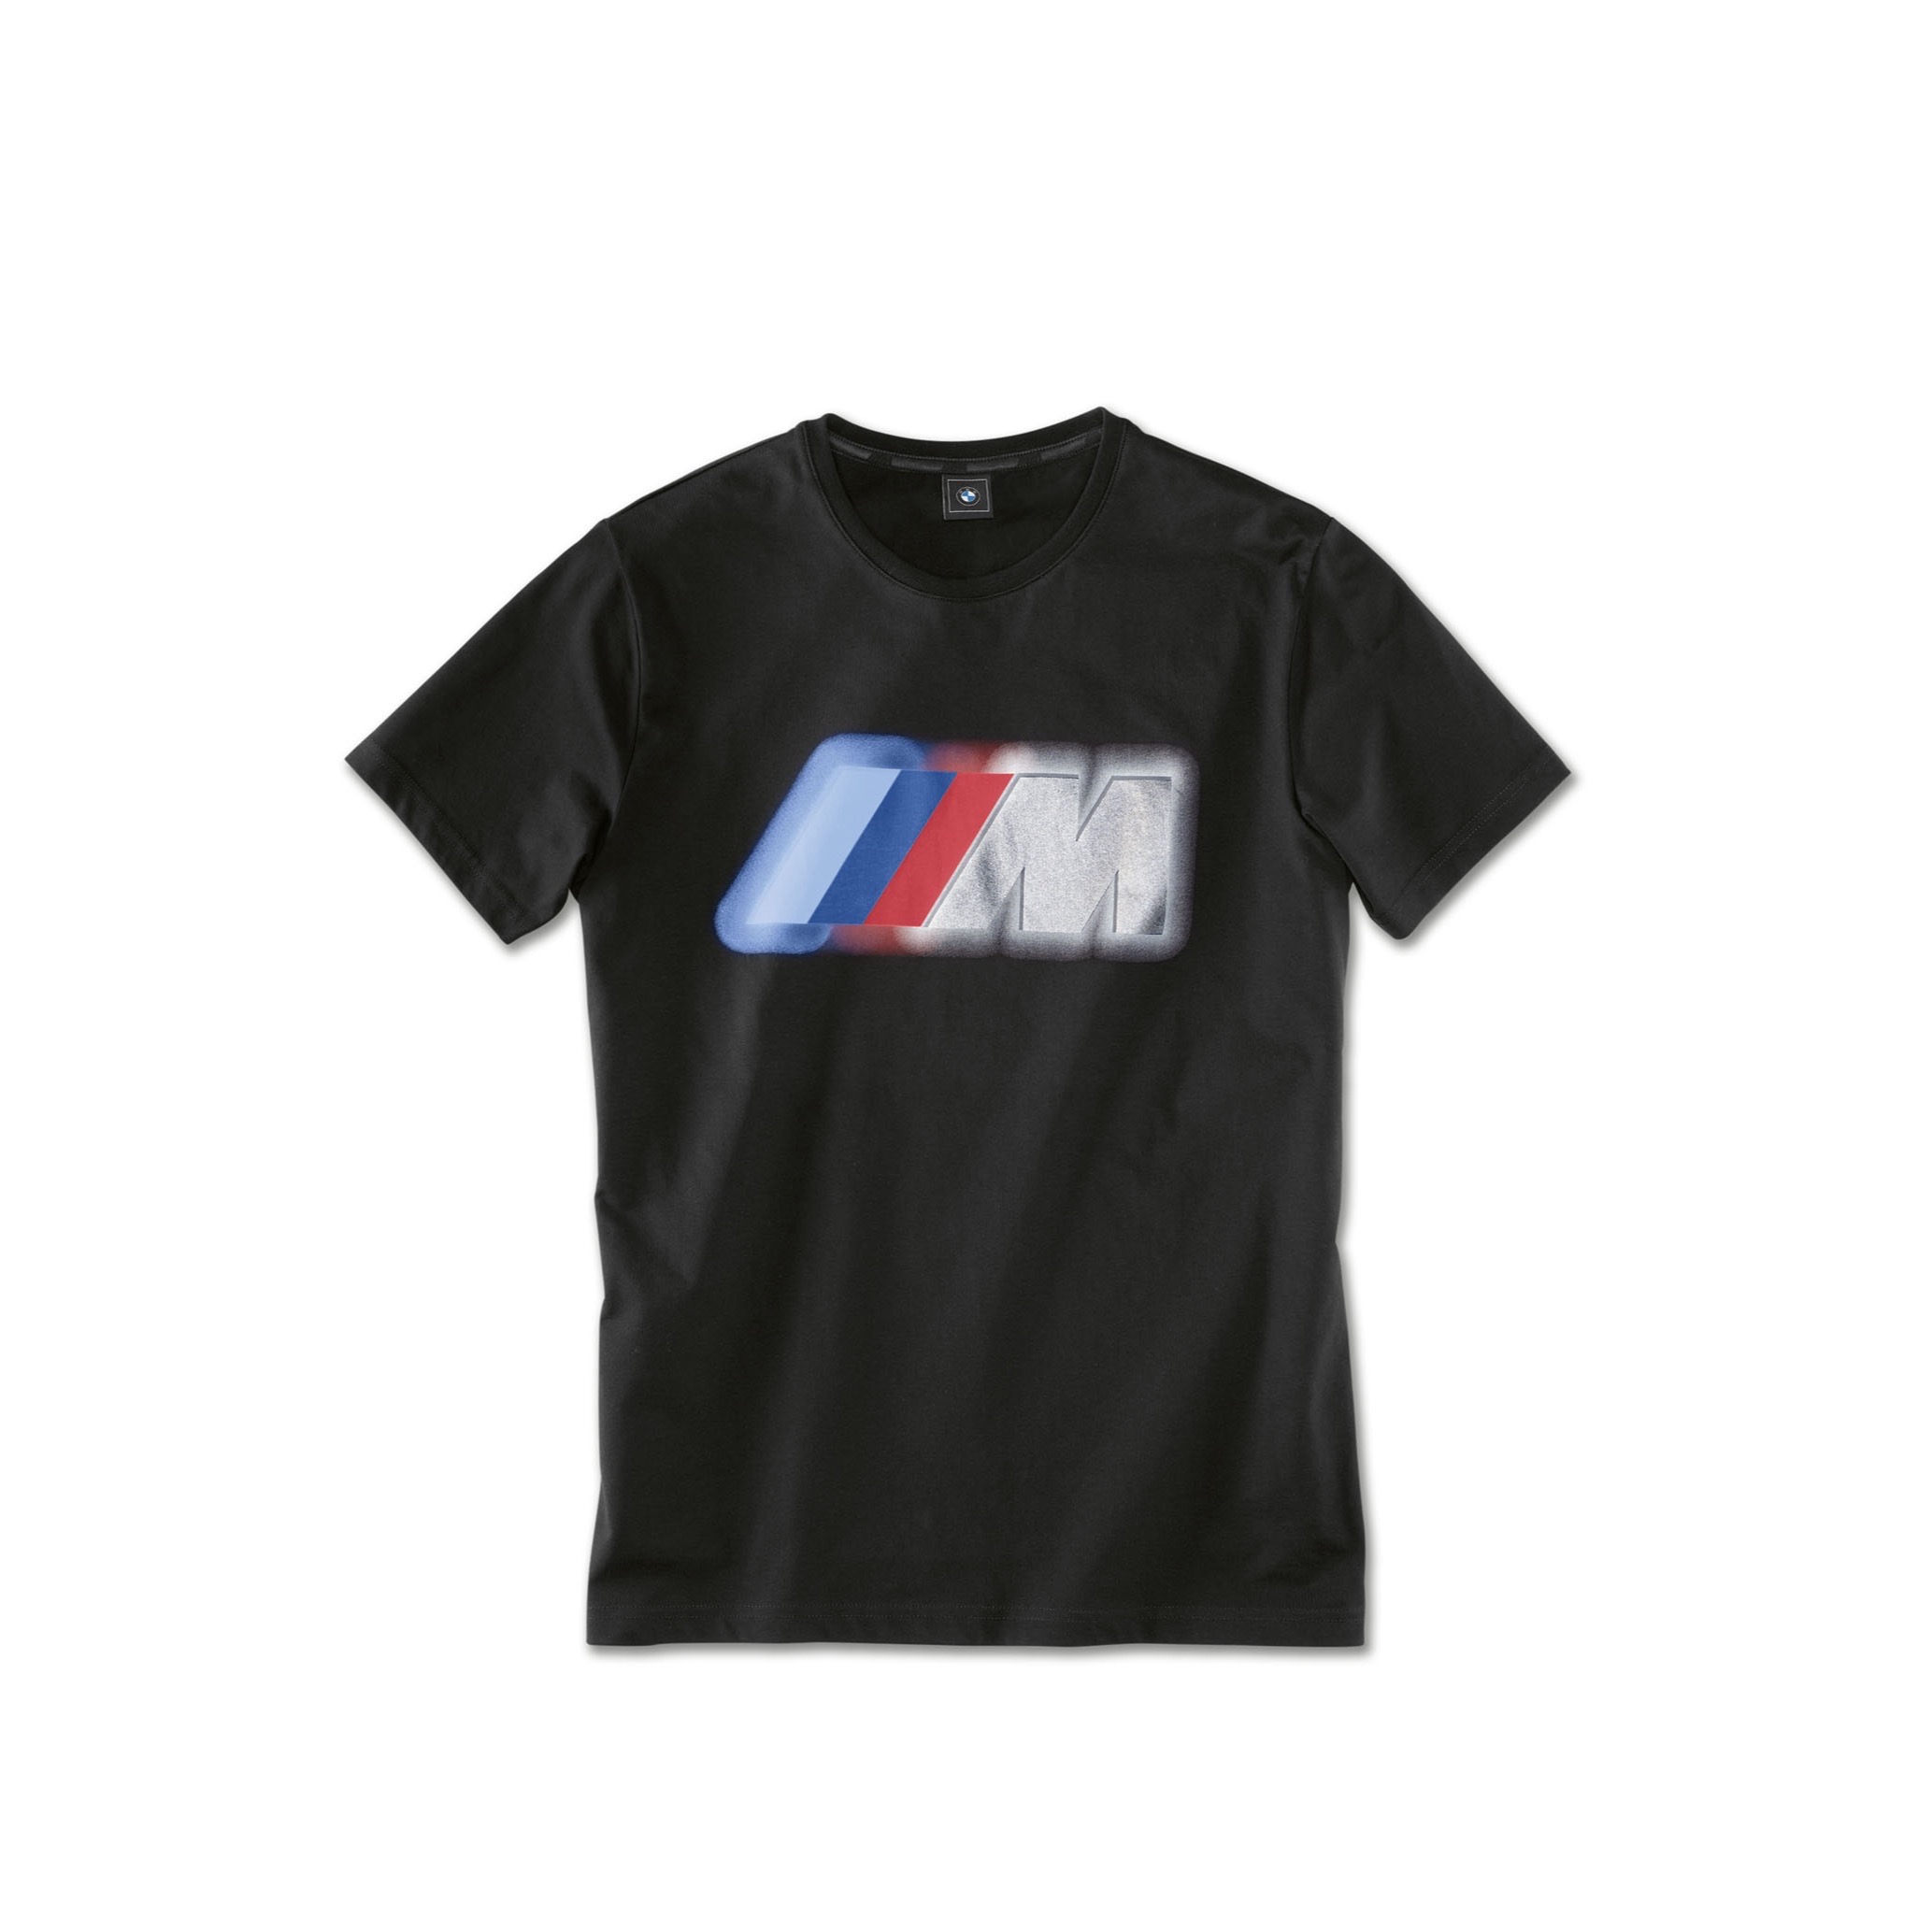 BMW M Logo T-Shirt | BMW Motorcycles Southeast Michigan